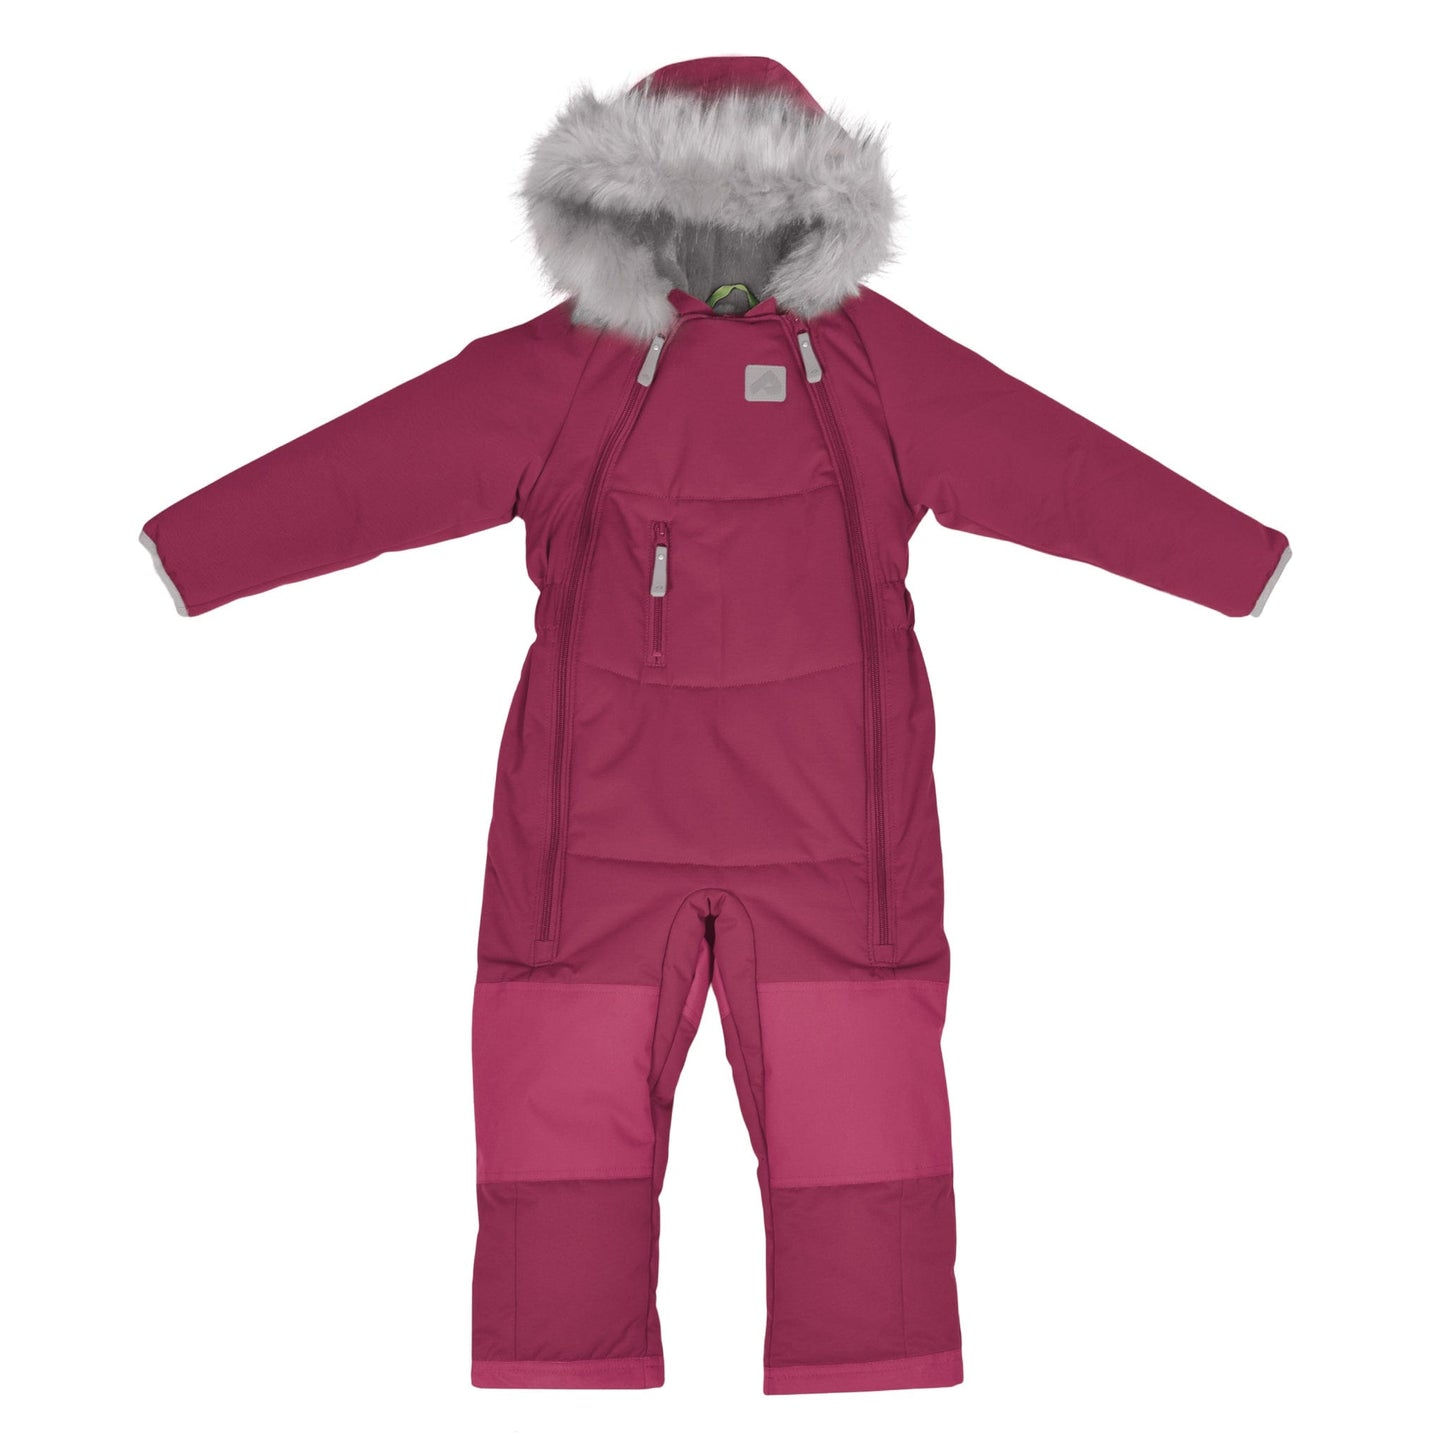 One piece toddler snowsuit - Cranberry textured